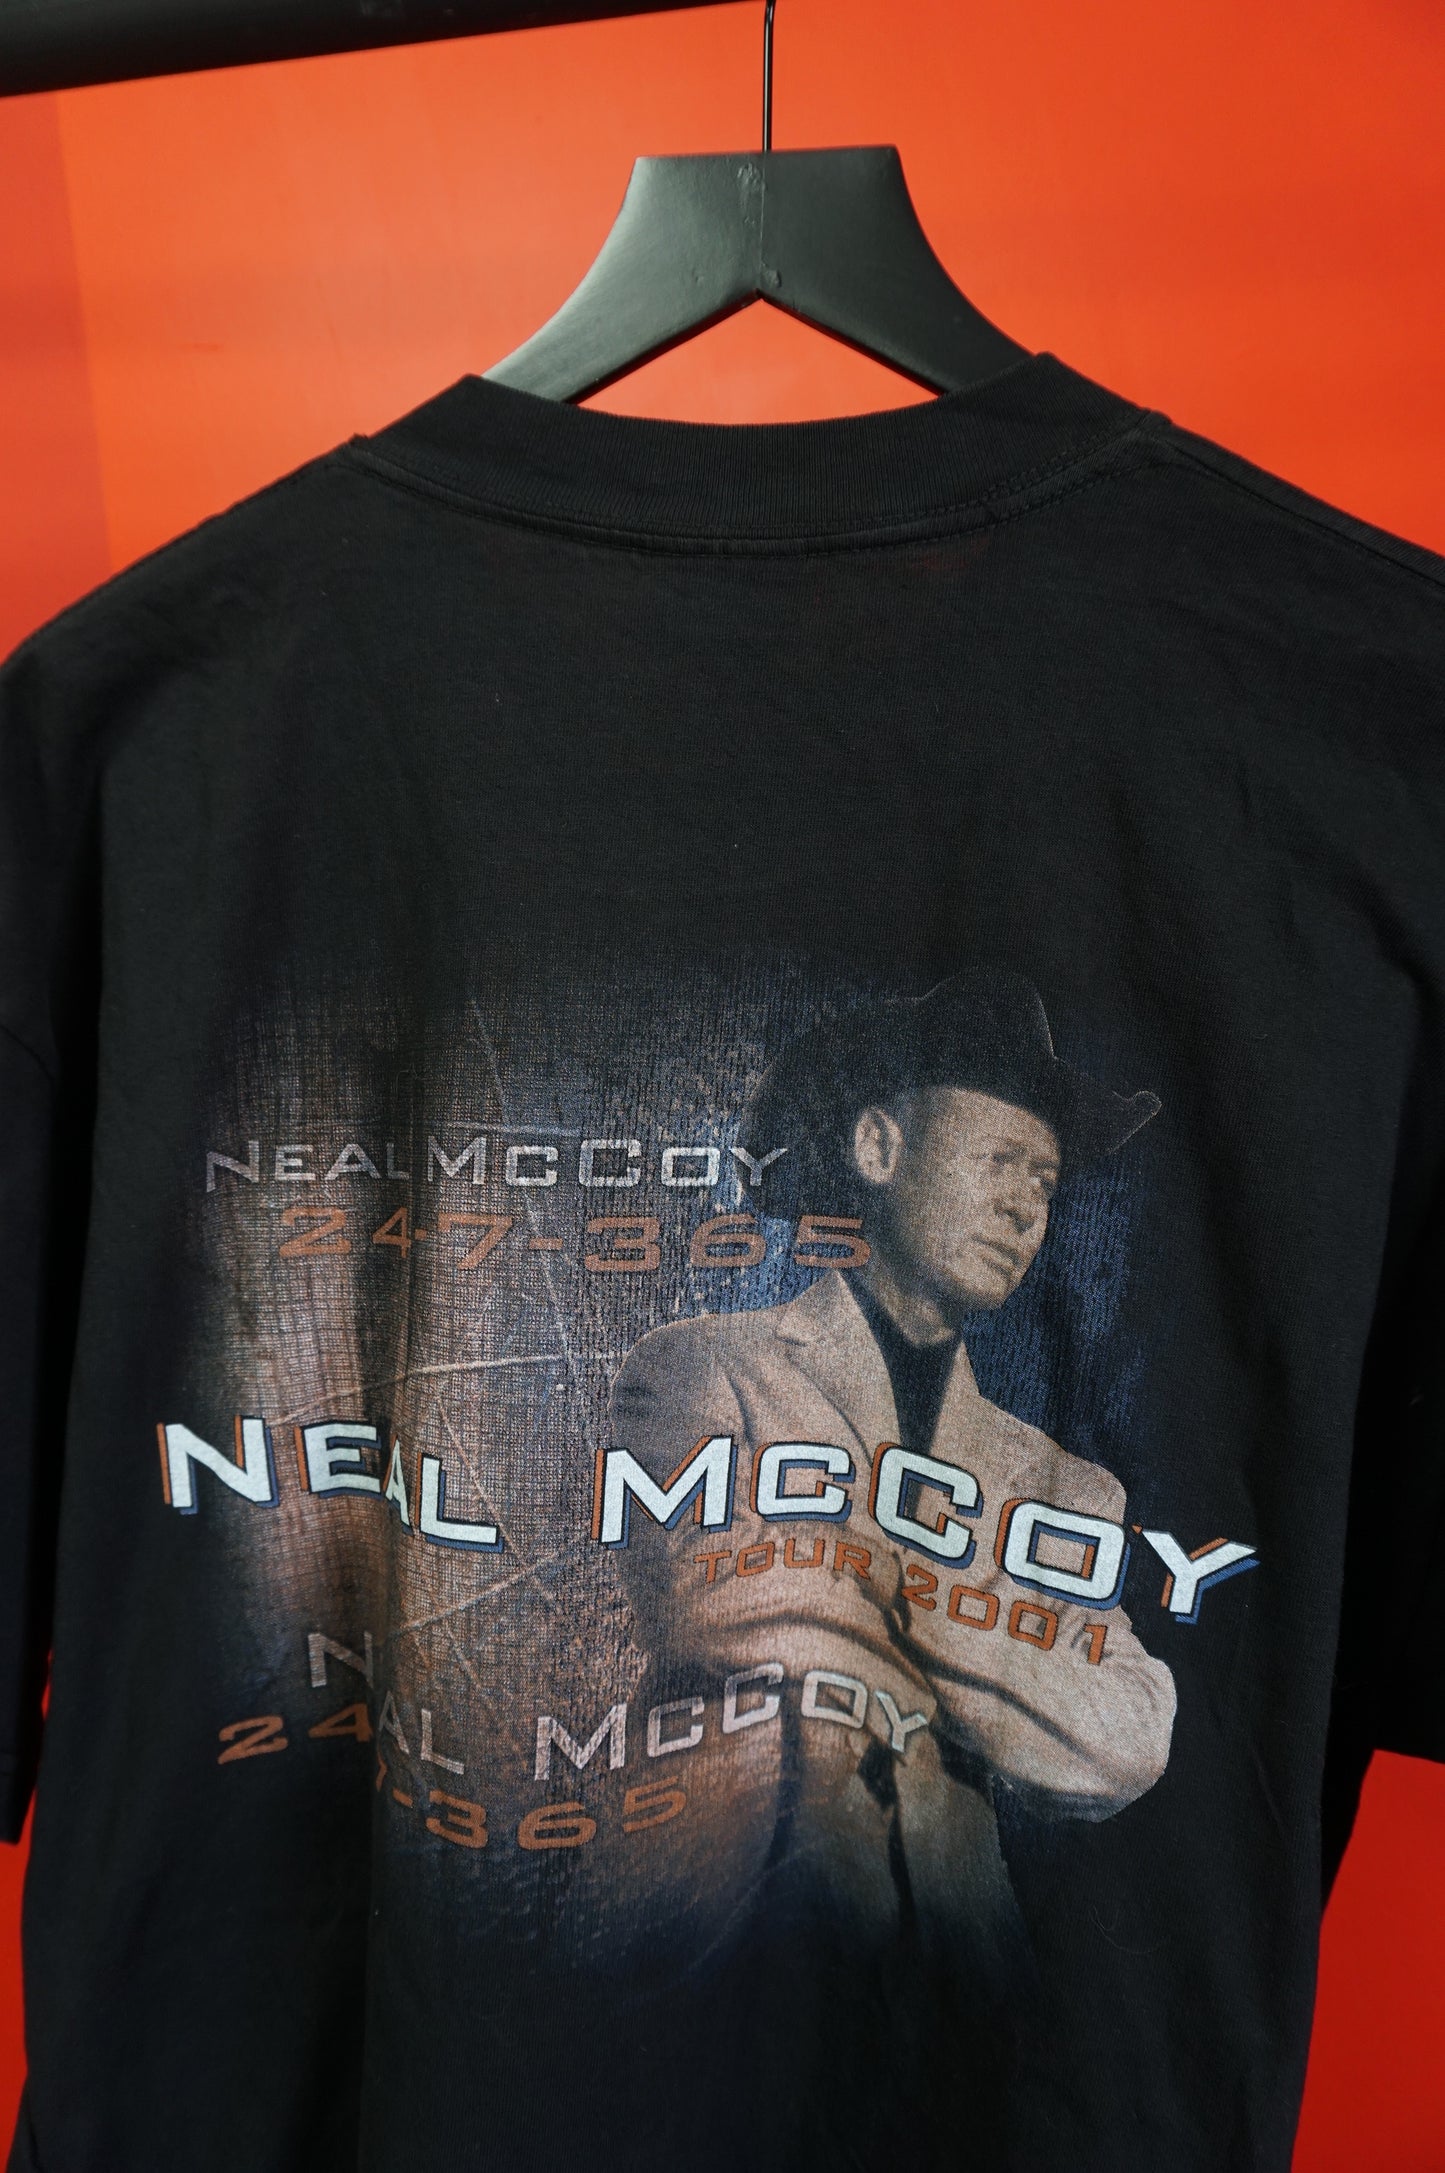 (XL) Neal McCoy 24/7 365 Tour T-Shirt